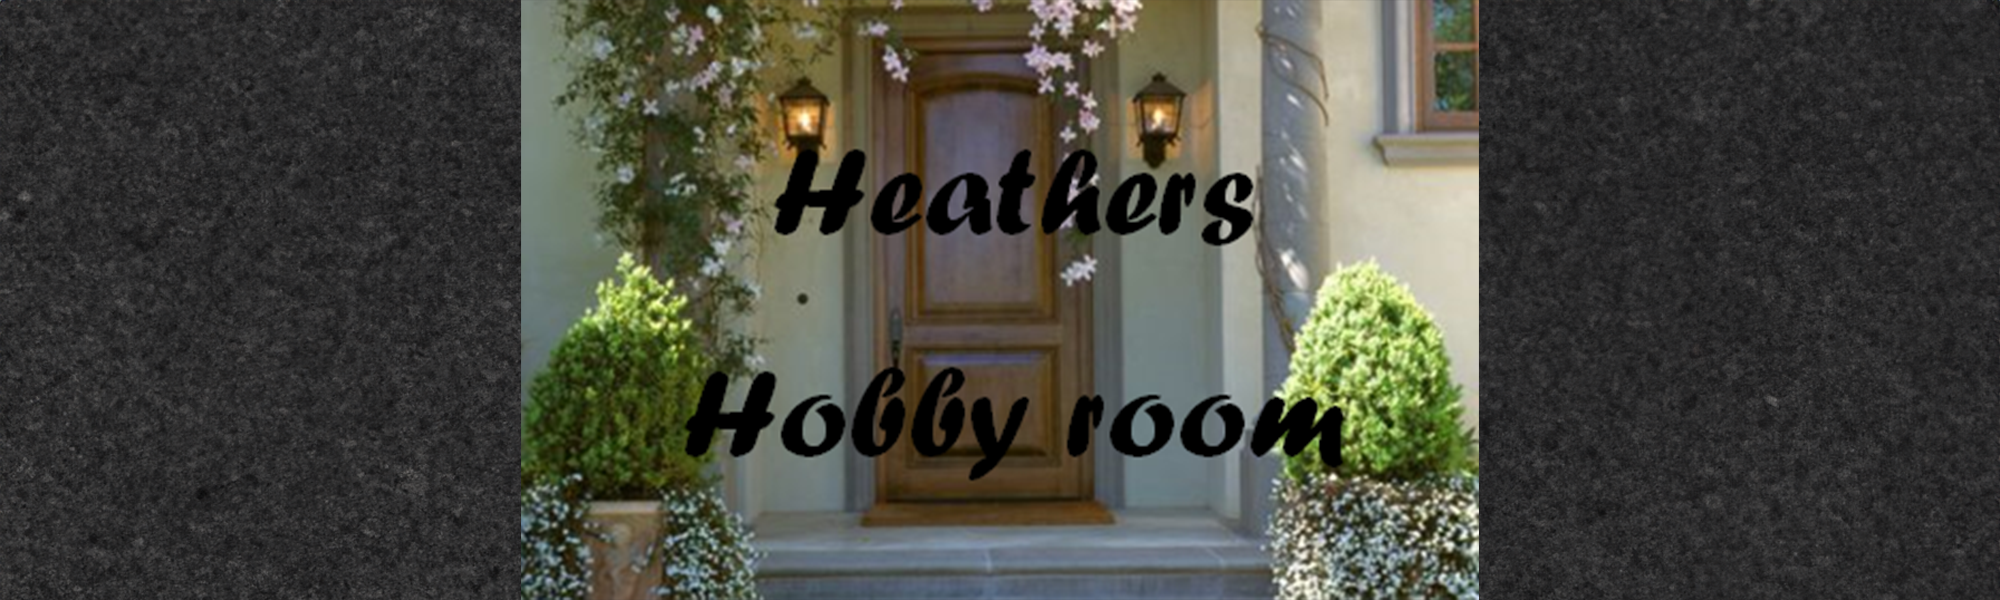 Heathers Hobby Room